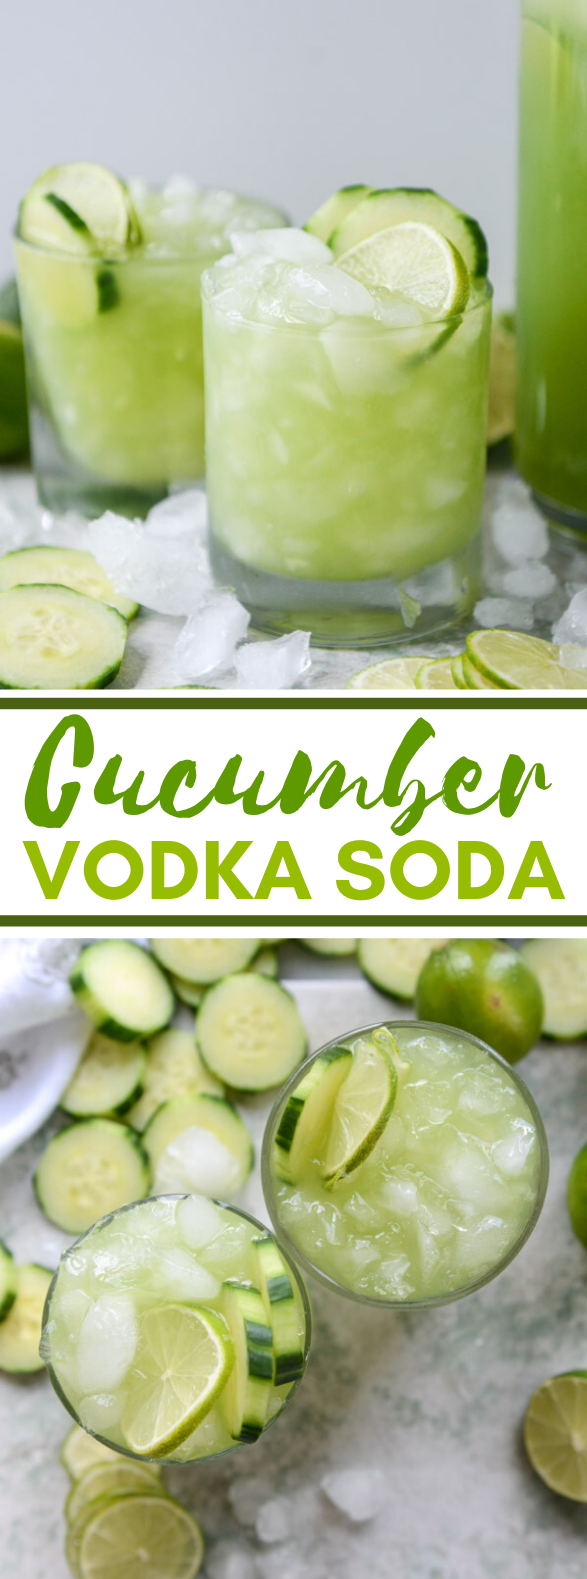 CUCUMBER VODKA SODA #drinks #cocktails